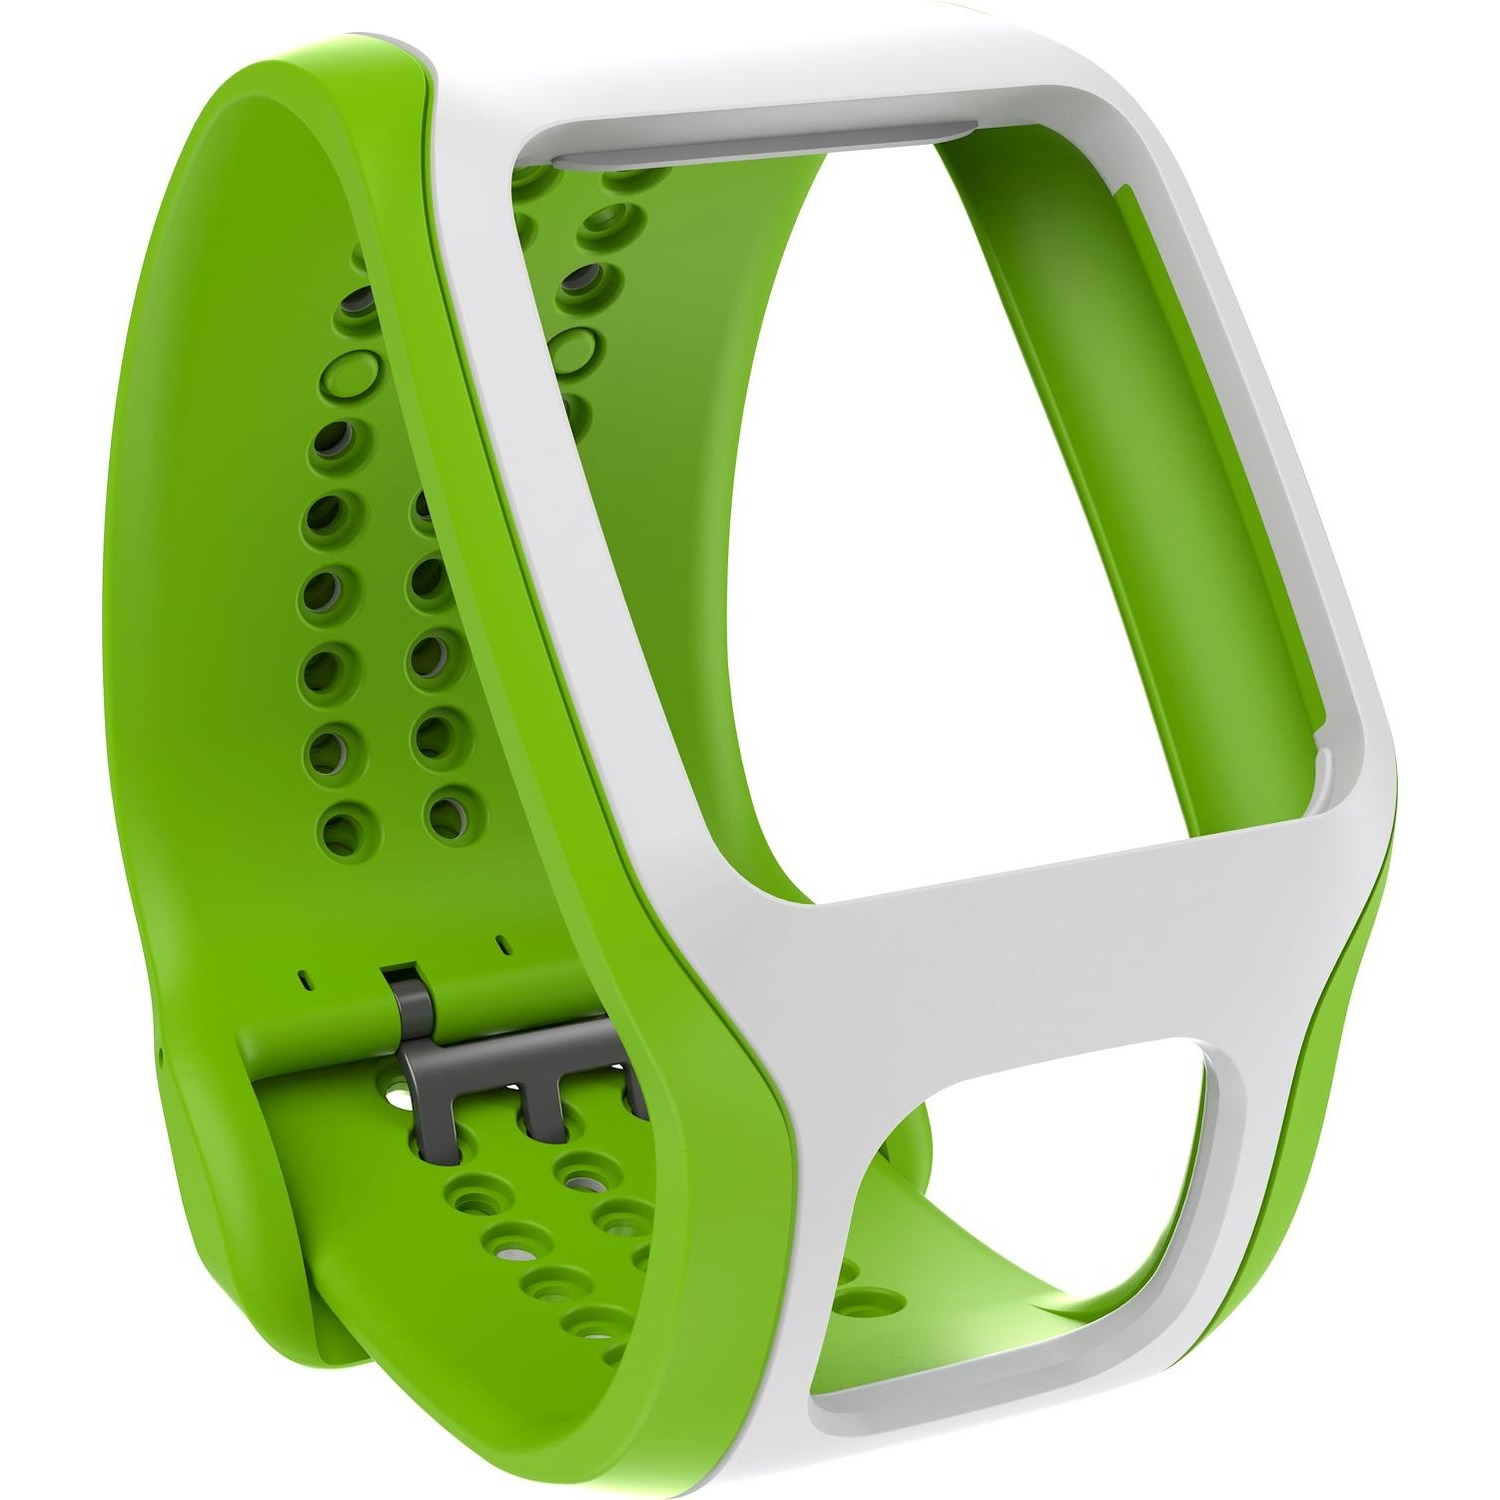 Immagine per Cinturino regolabile green per Sportwatch TomTom da DIMOStore